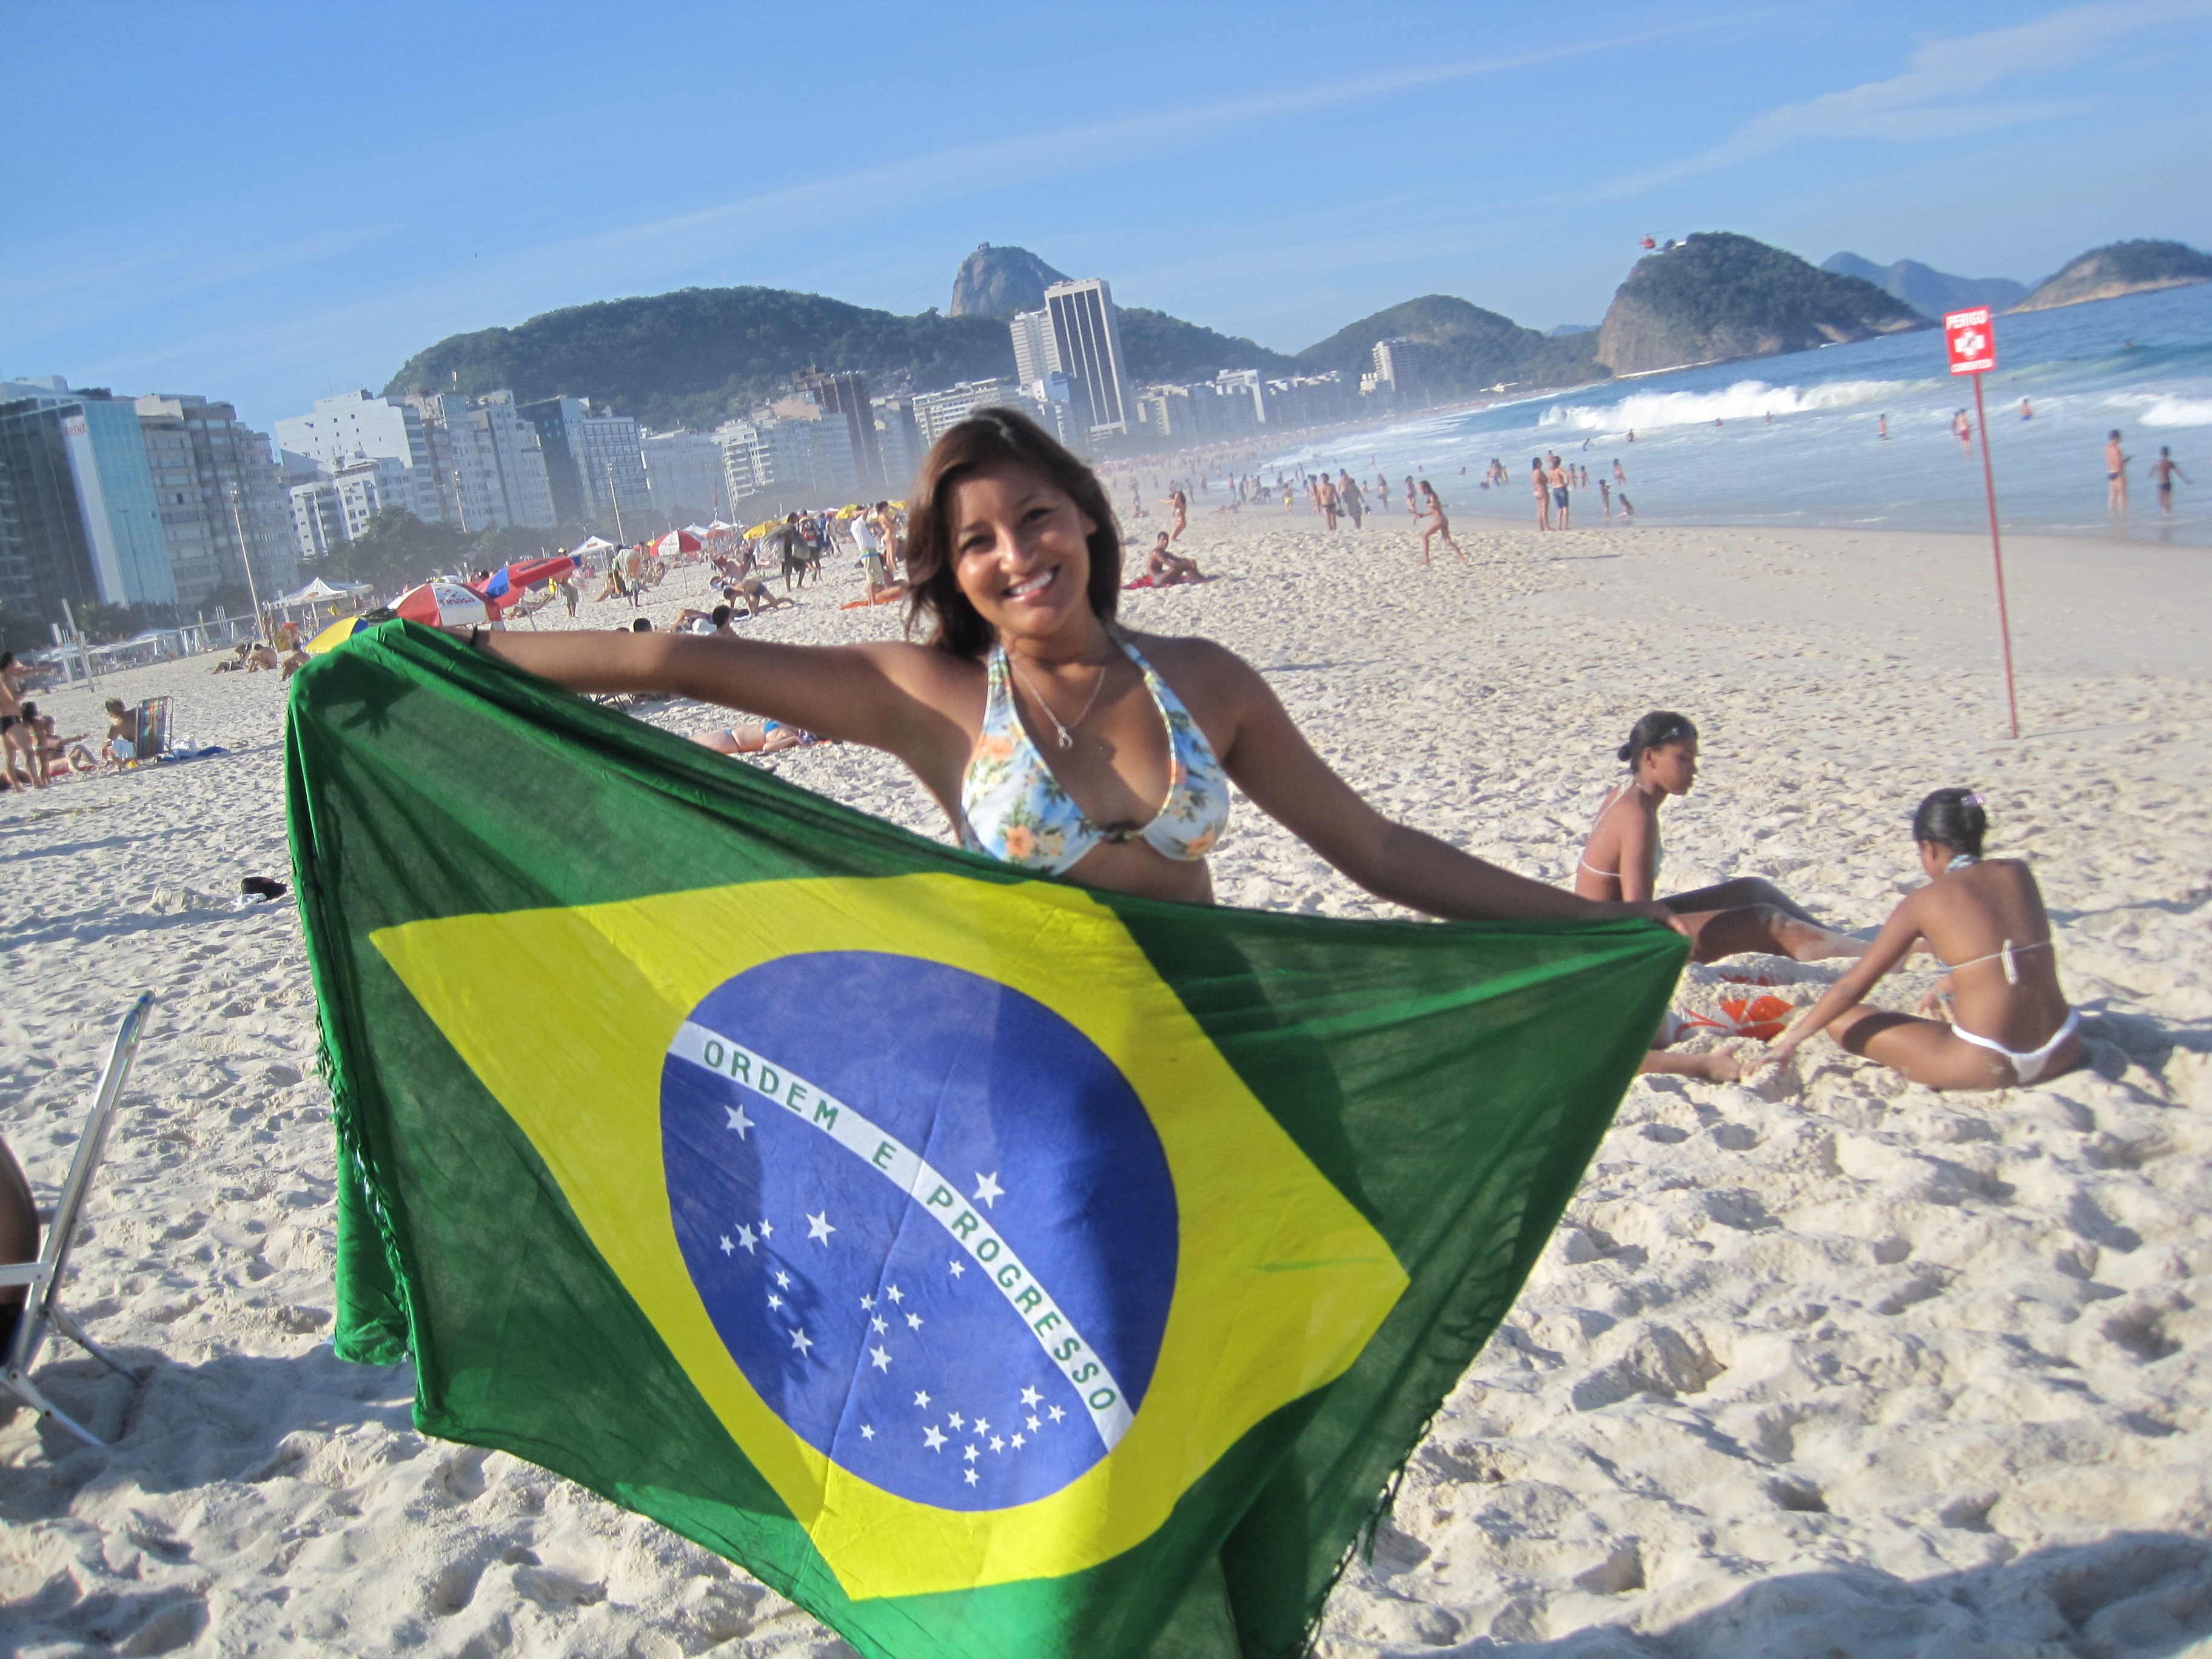 Cristian-on-beach-in-Brazil1.jpg